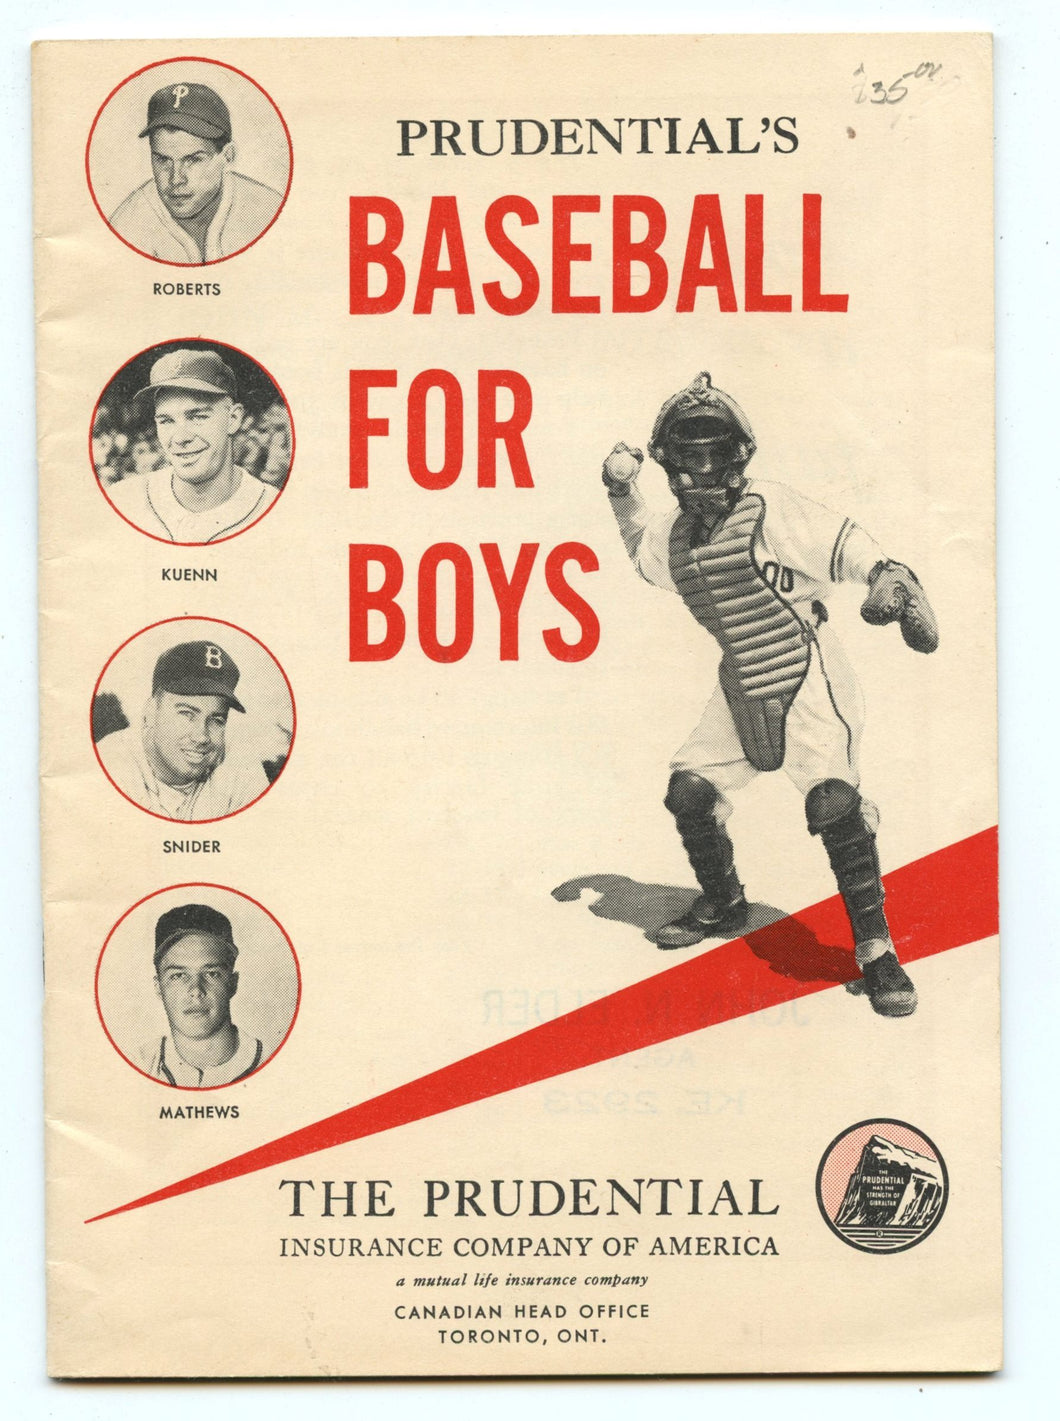 Prudential's Baseball For Boys